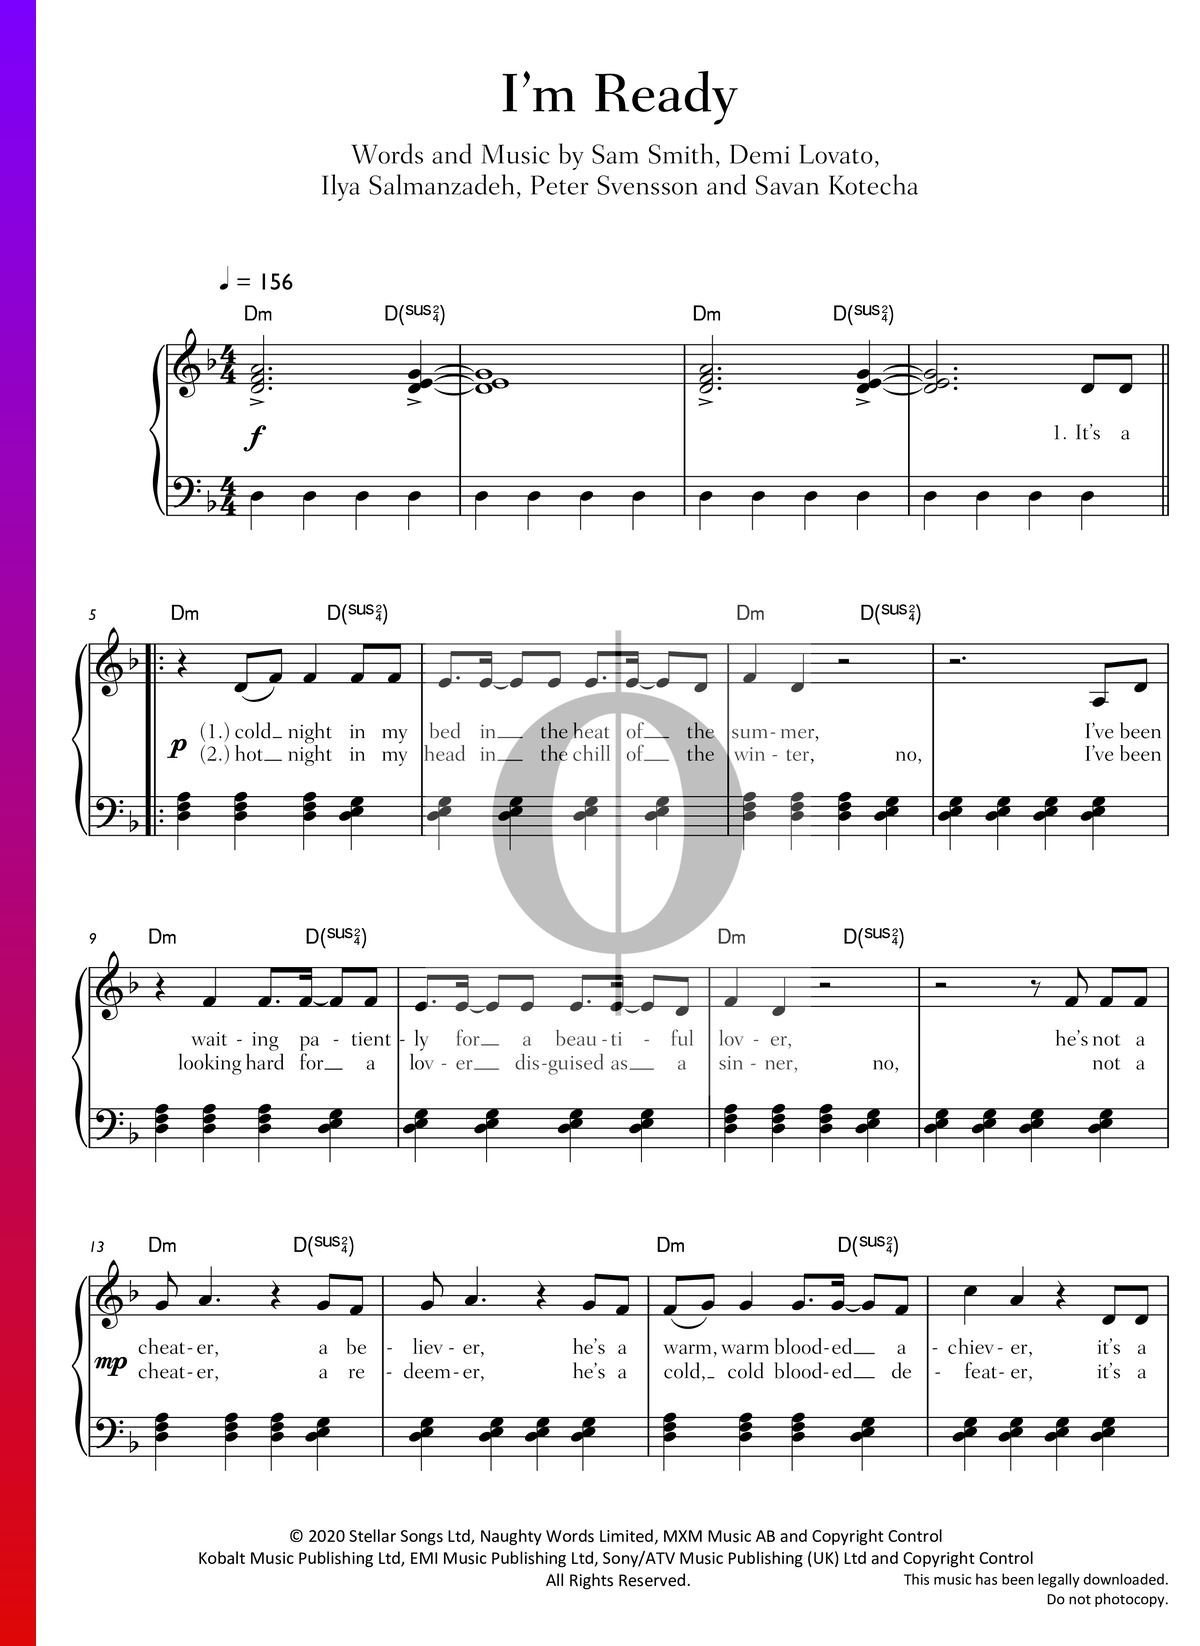 Leonard Cohen - Hallelujah (Demi Lovato Cover) [Full HD] lyrics 